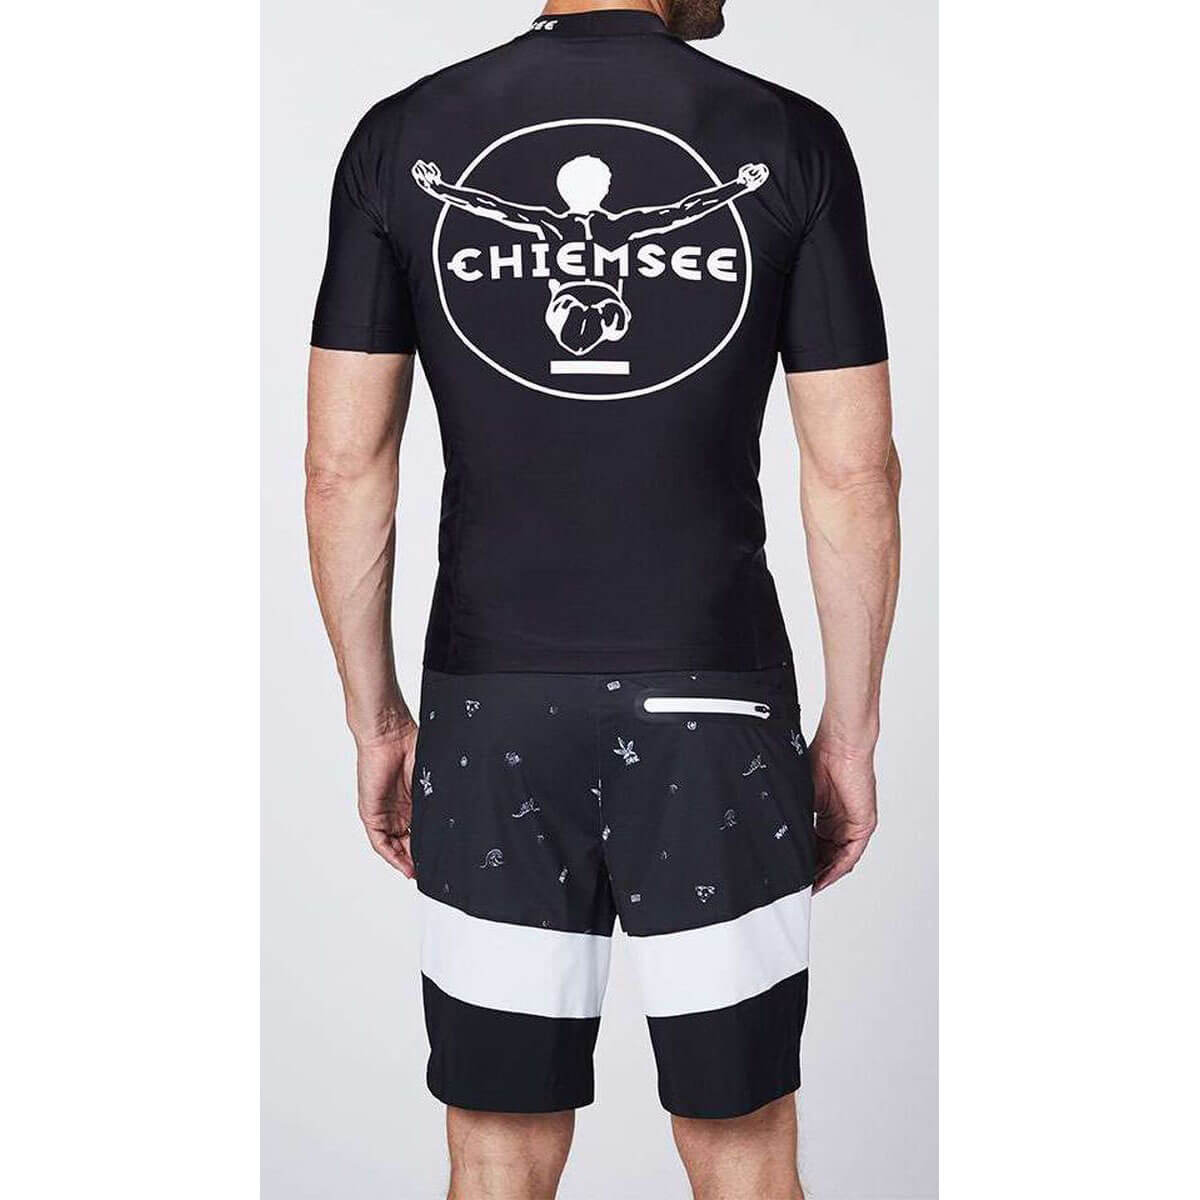 Chiemsee Awesome Swimshirt Funktionsshirt schwarz Bekleidung Funktionsshirts | | SUP